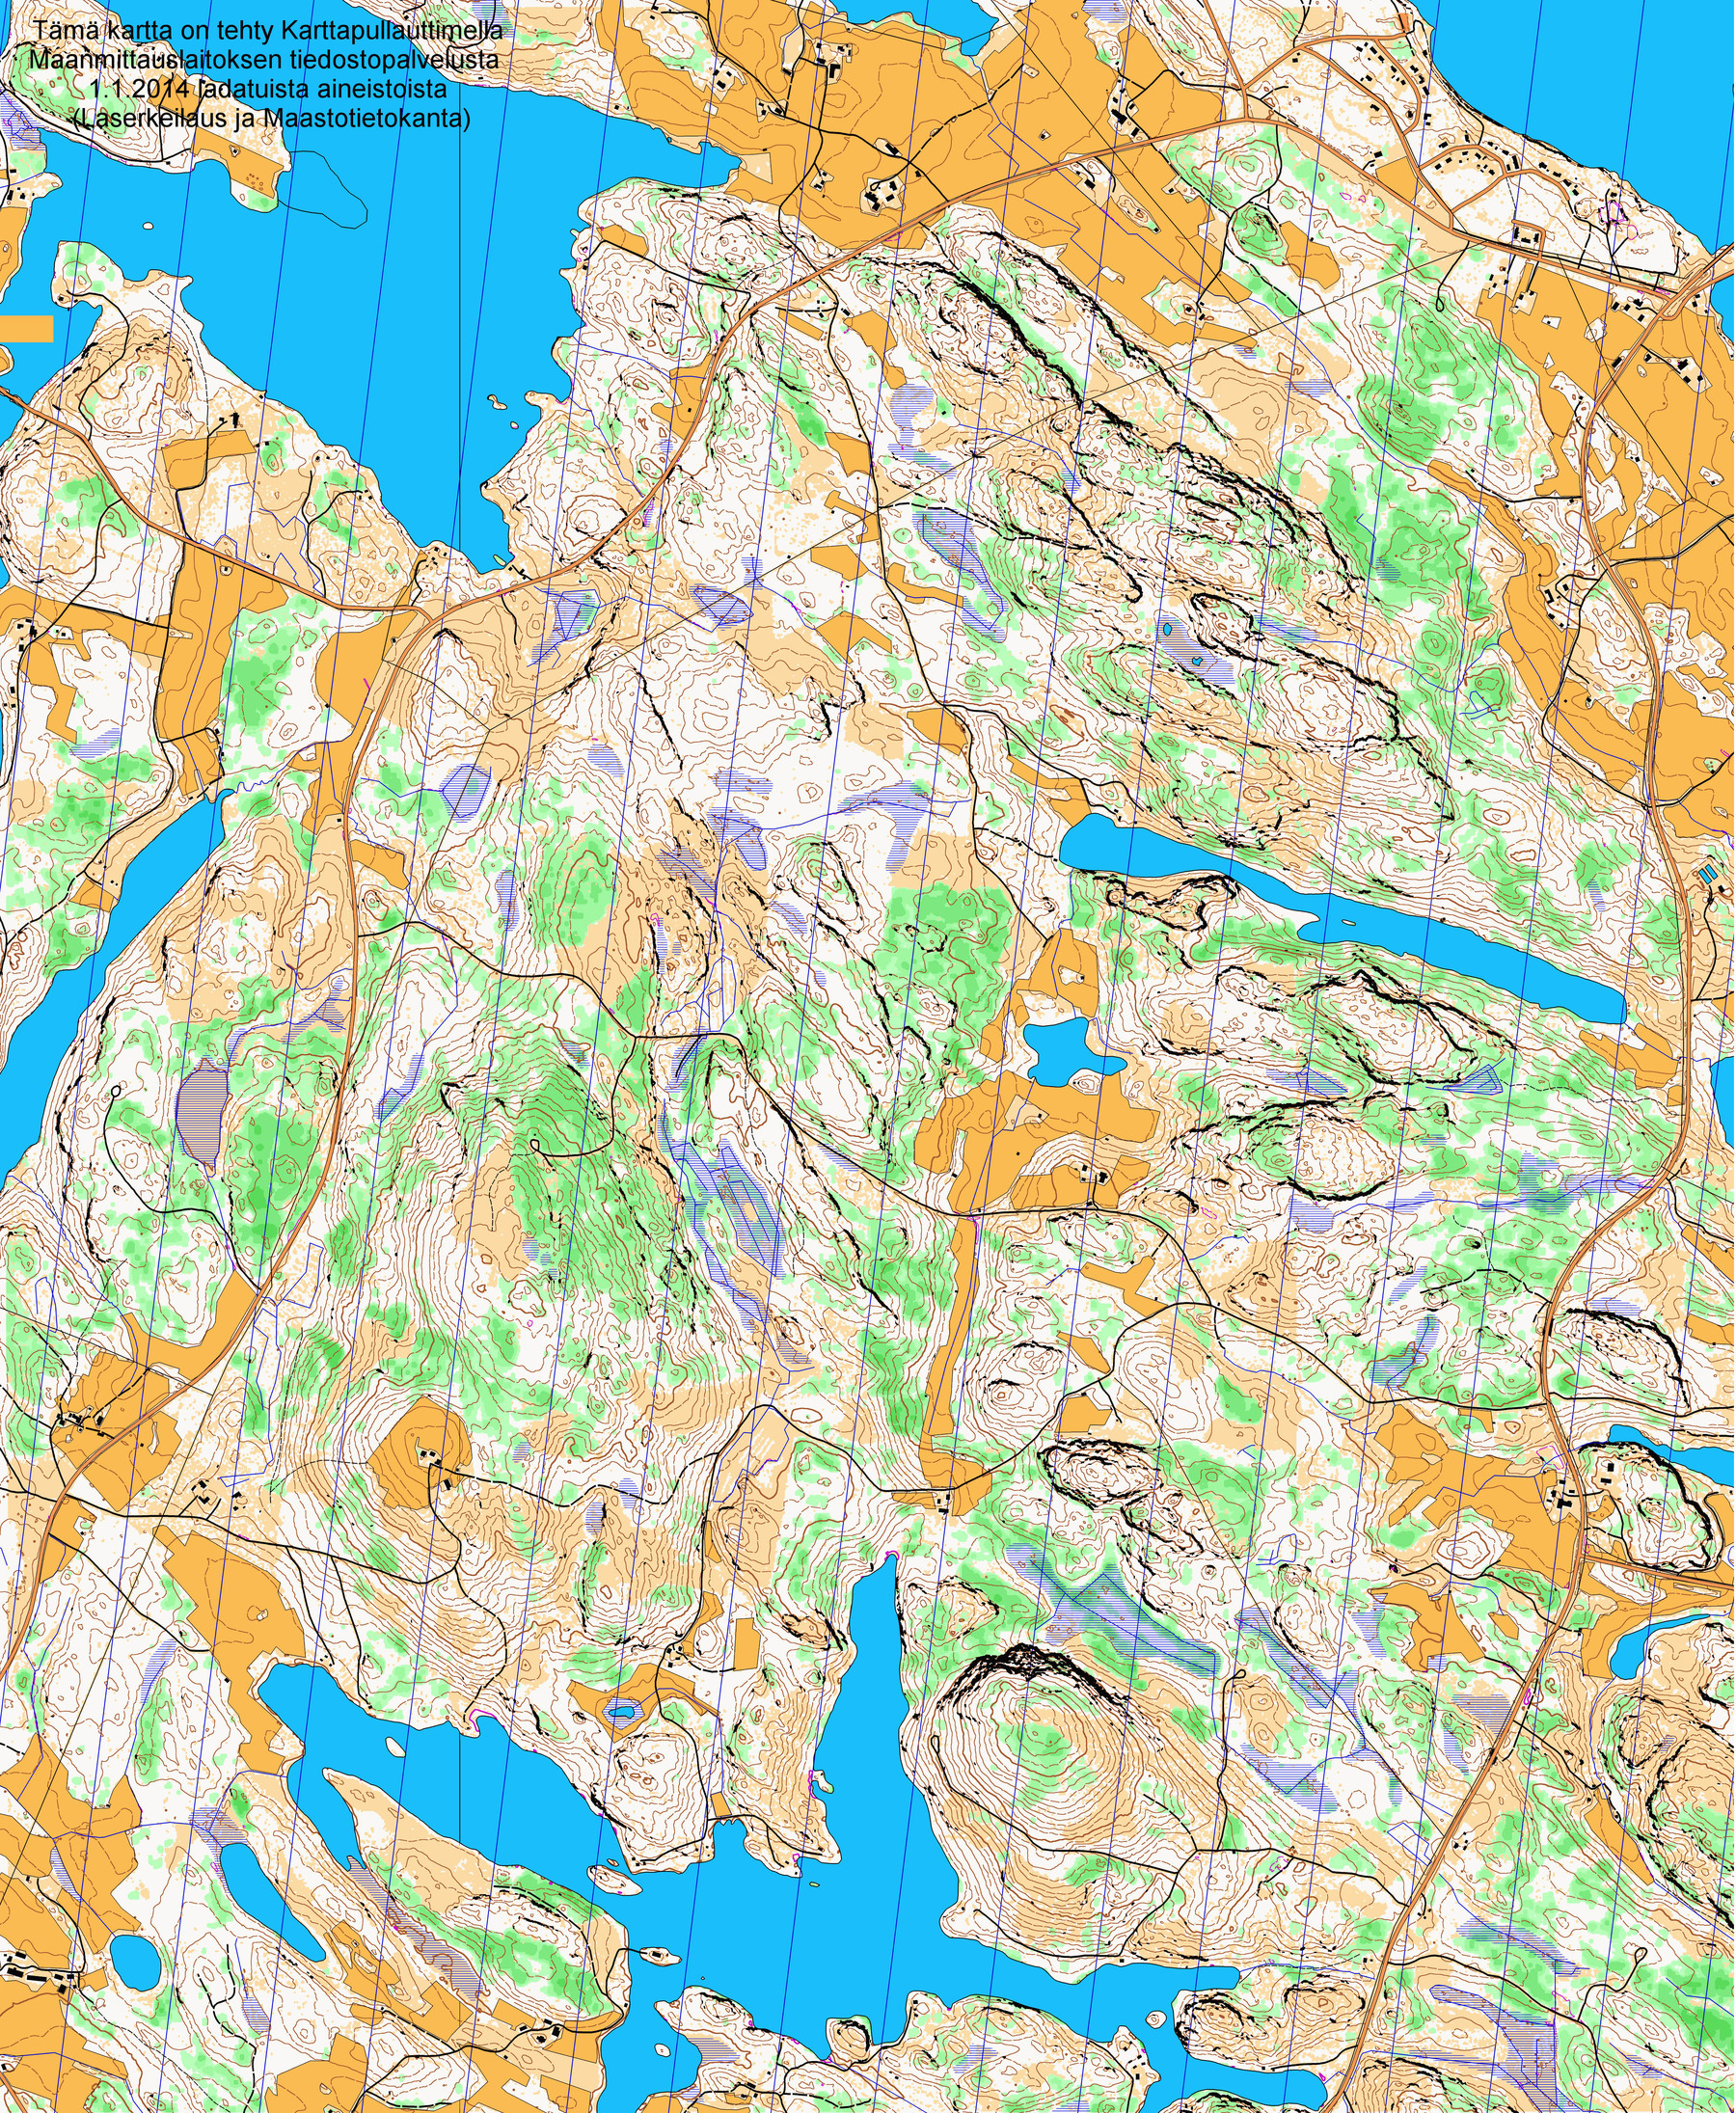 Jukola 2014 maps: Click to compare maps (03-01-2014)